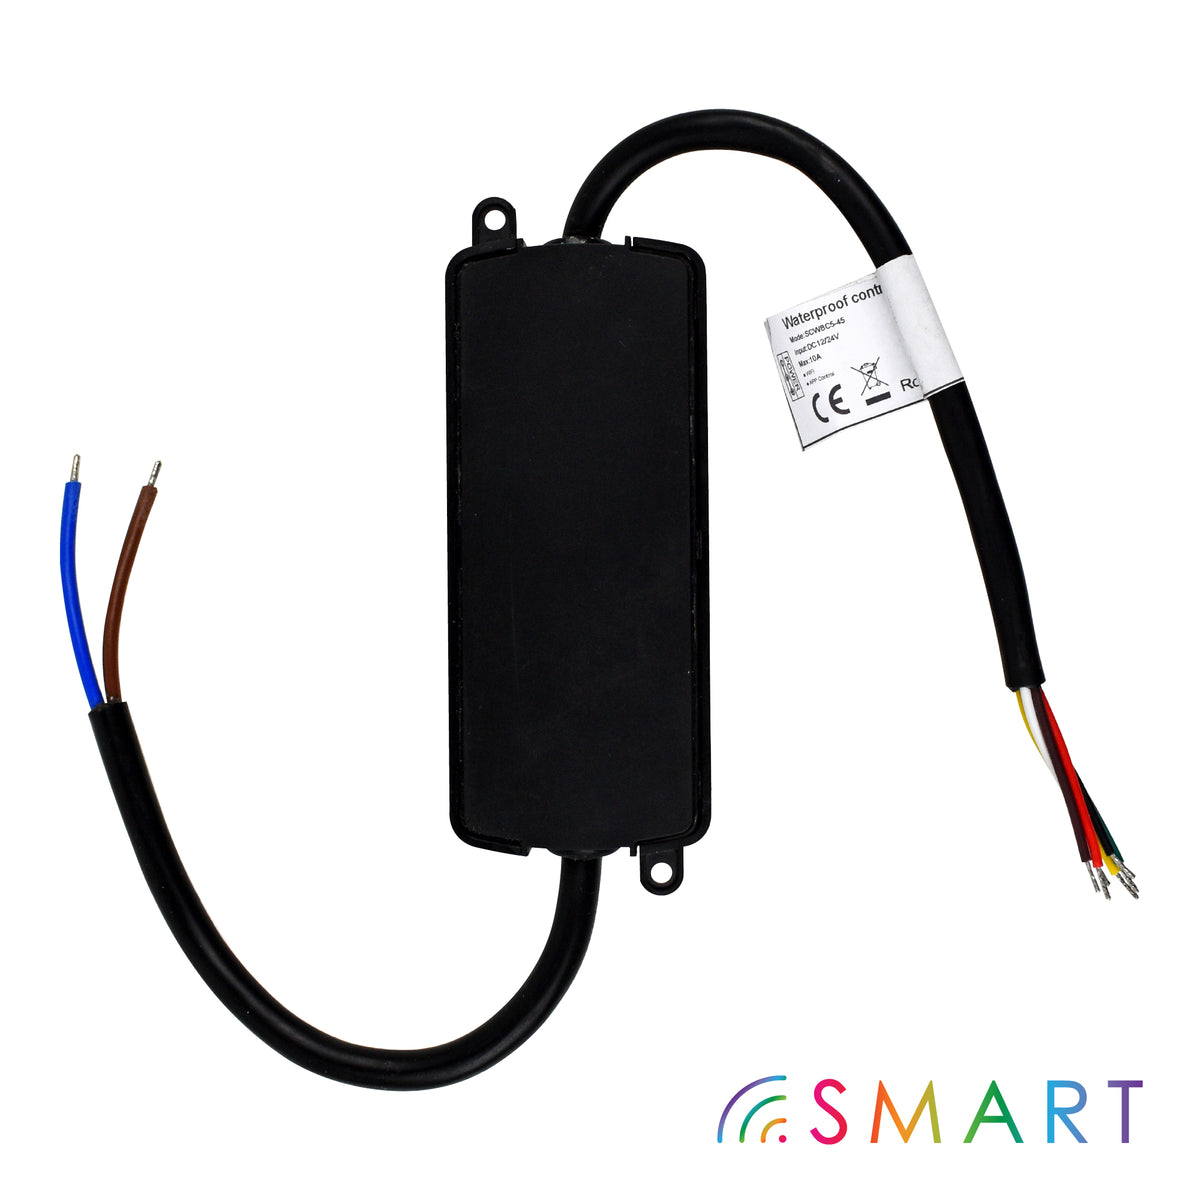 CLEANLIFE® Smart Indoor USB Light Strip Kit - RGB+3000K, WiFi + Blueto